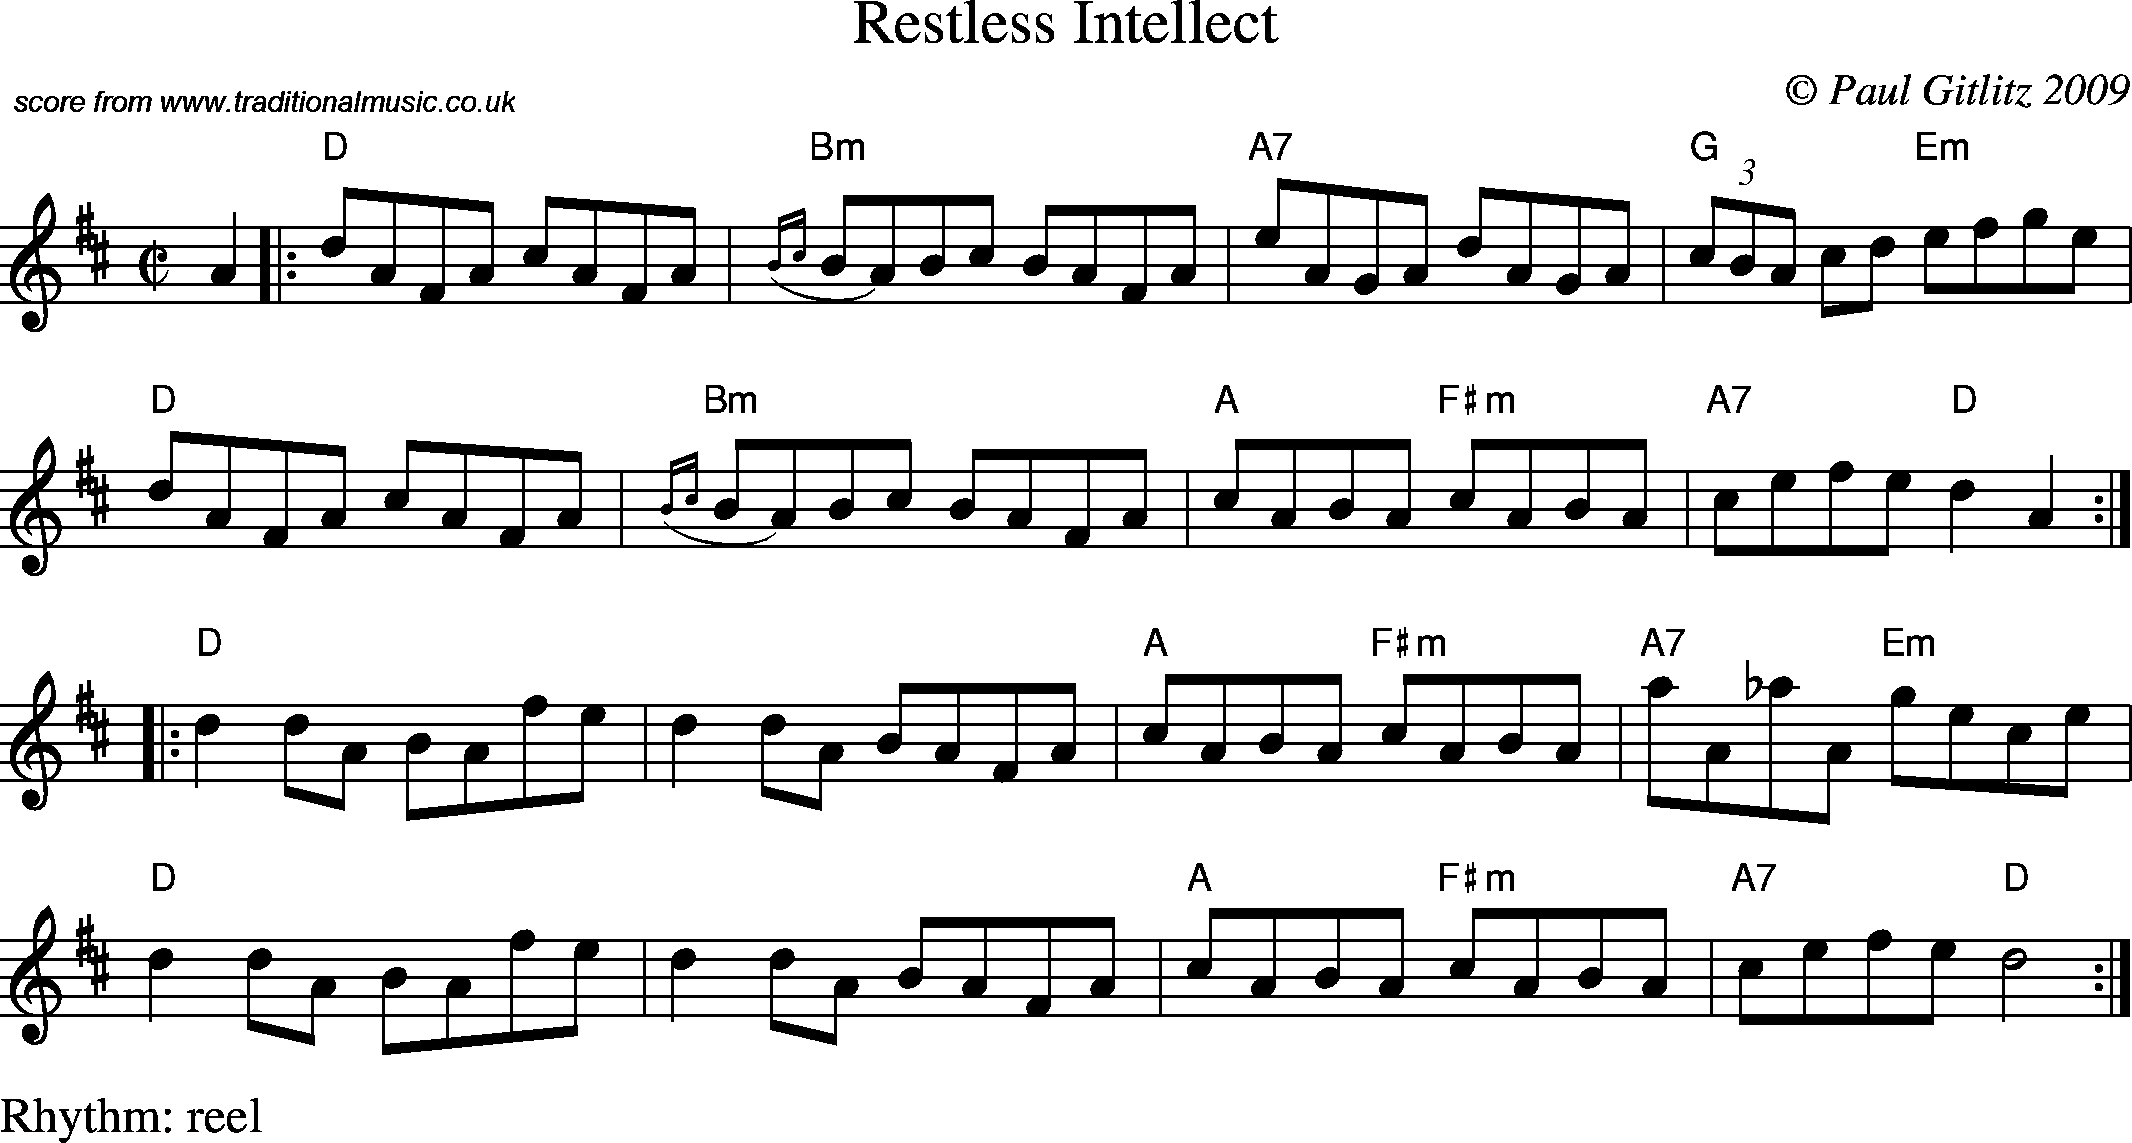 Sheet Music Score for Reel - Restless Intellect